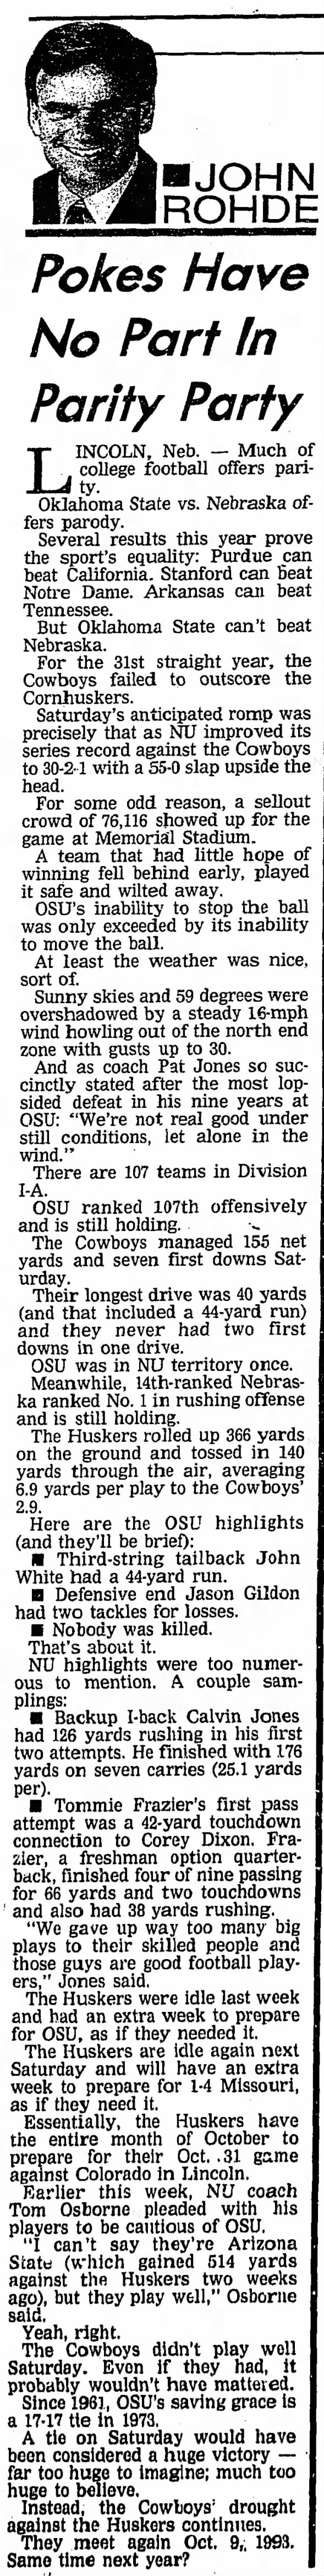 1992 Nebraska-Oklahoma State football, OKC column John Rohde